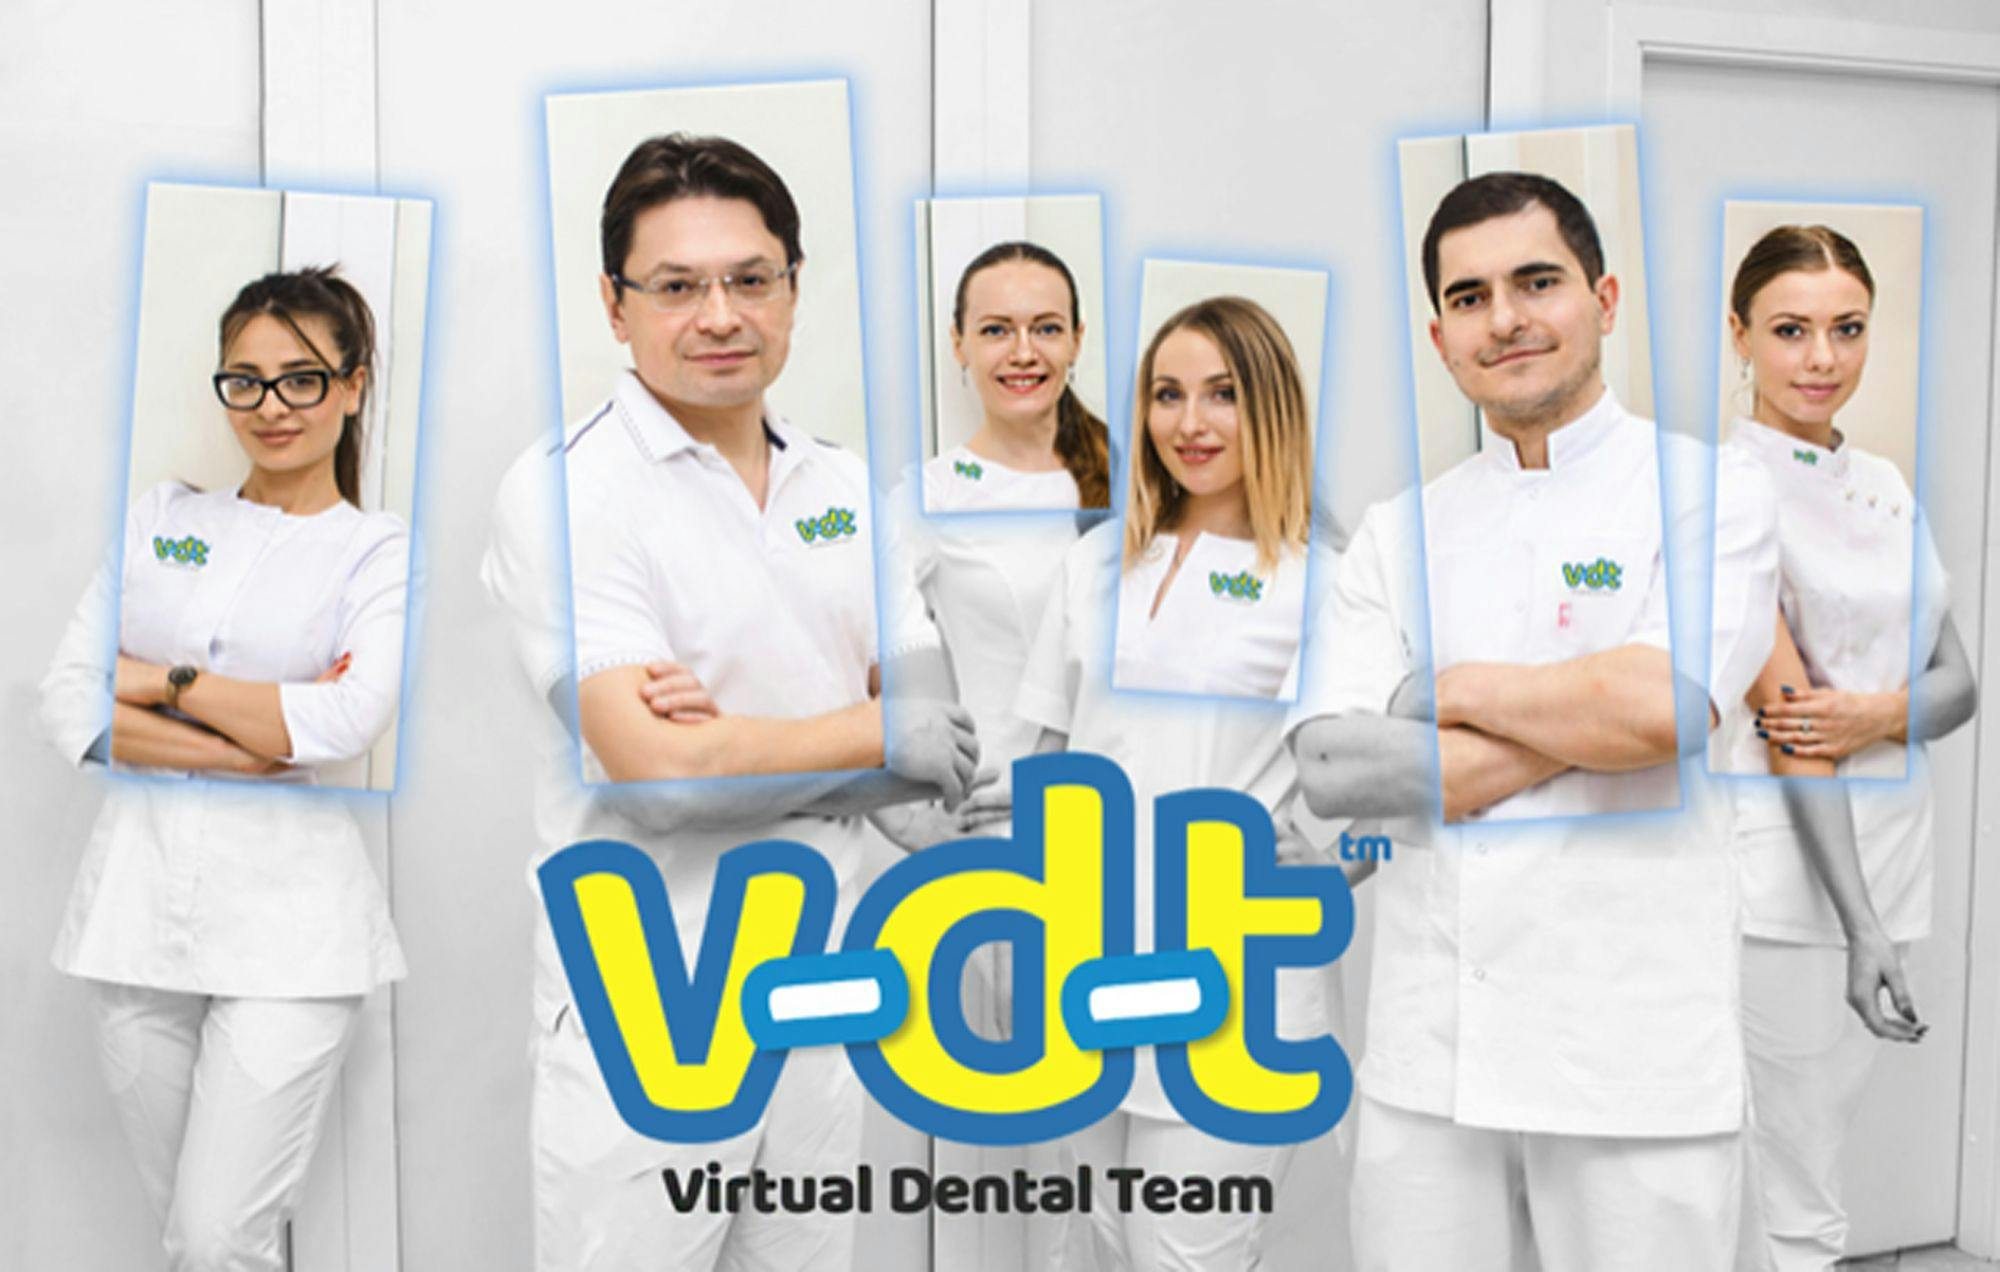 Virtual Dental Team from Ross Communications: © Ross Communications